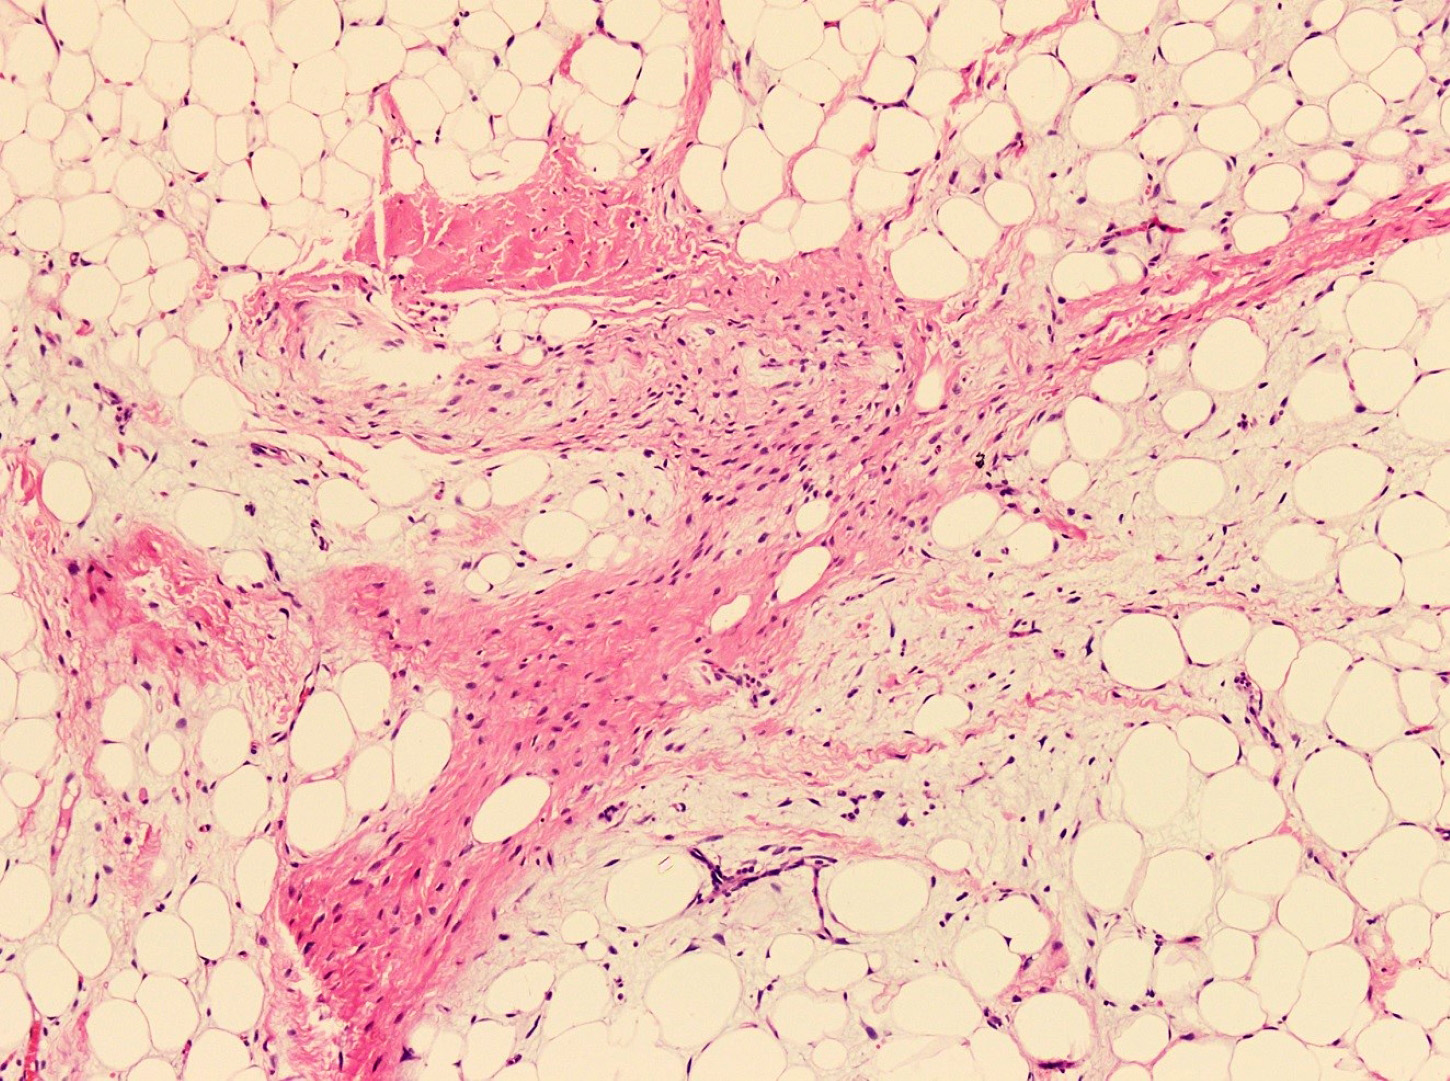 Primitive mesenchymal cells